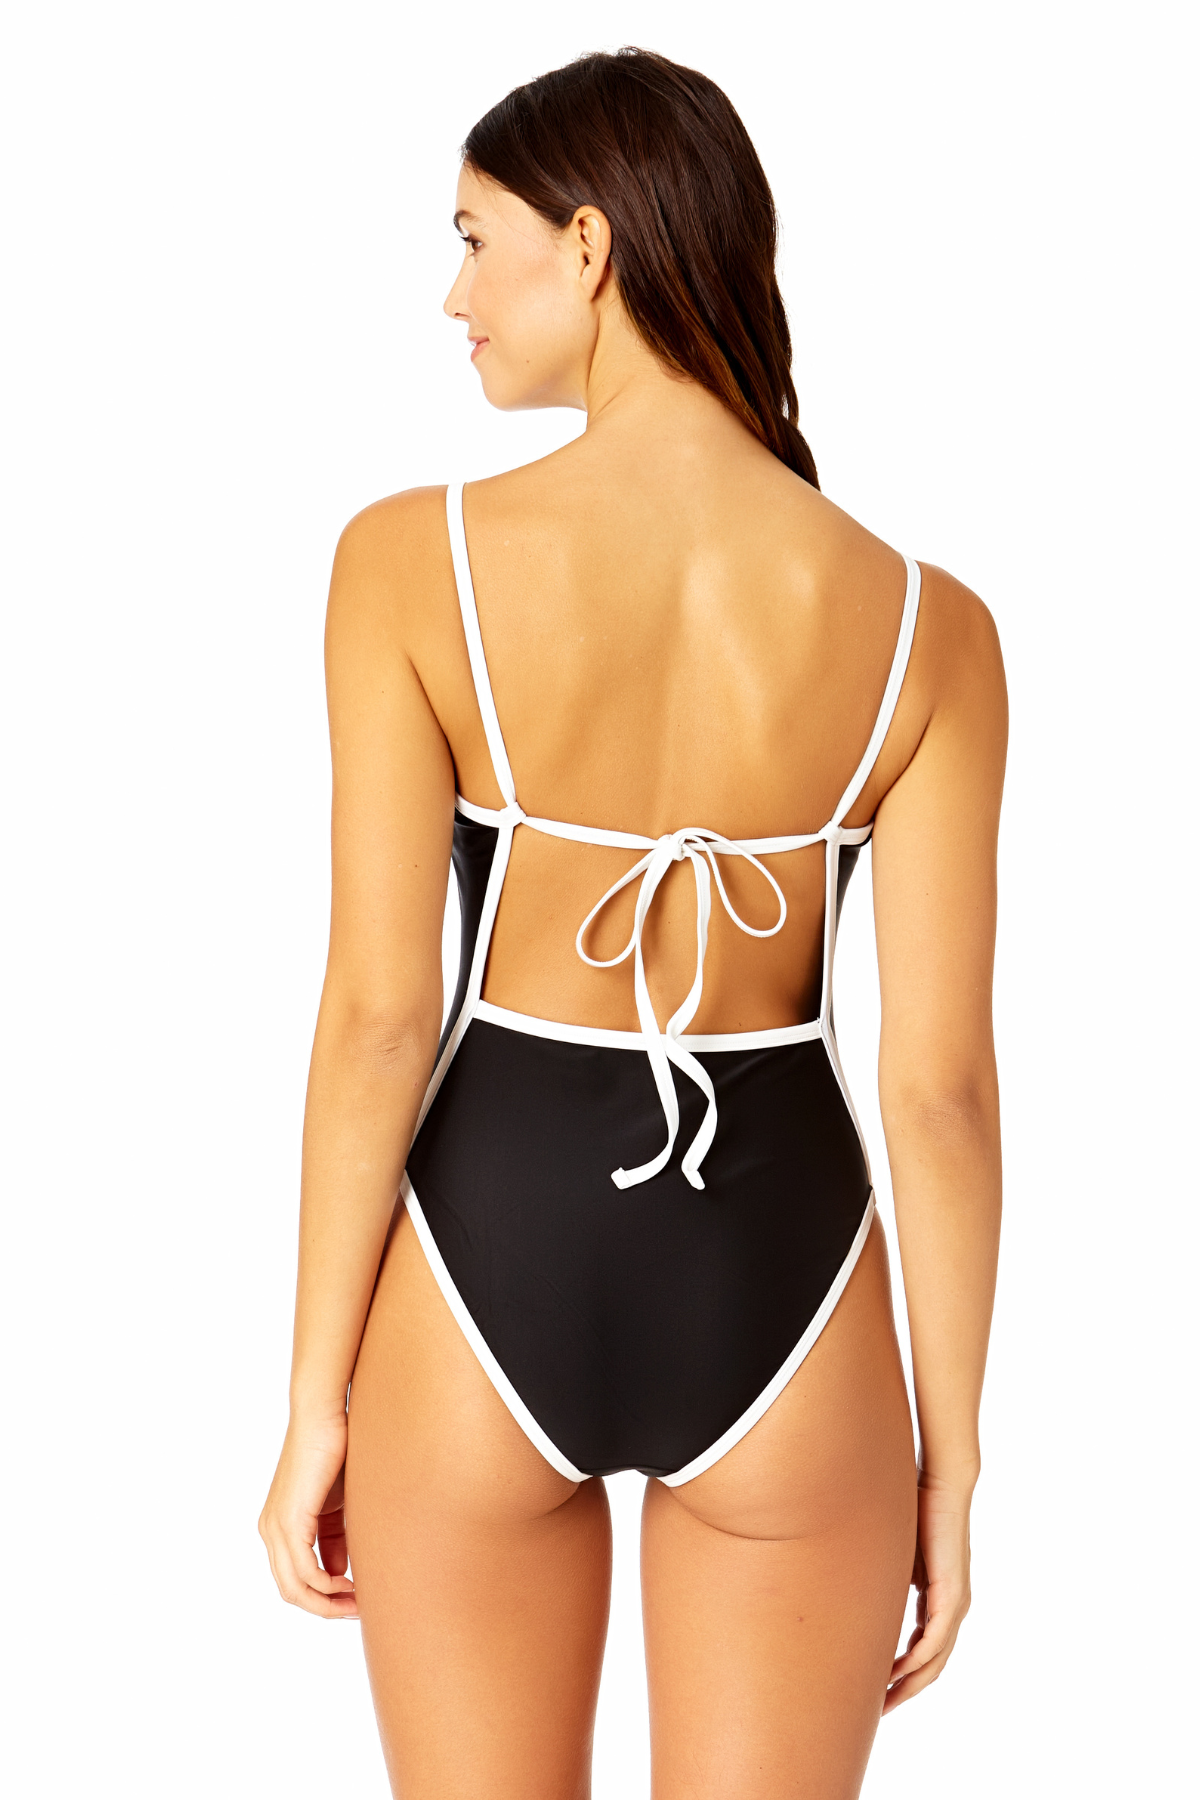 Coppersuit - Women's Sporty One Piece Swimsuit